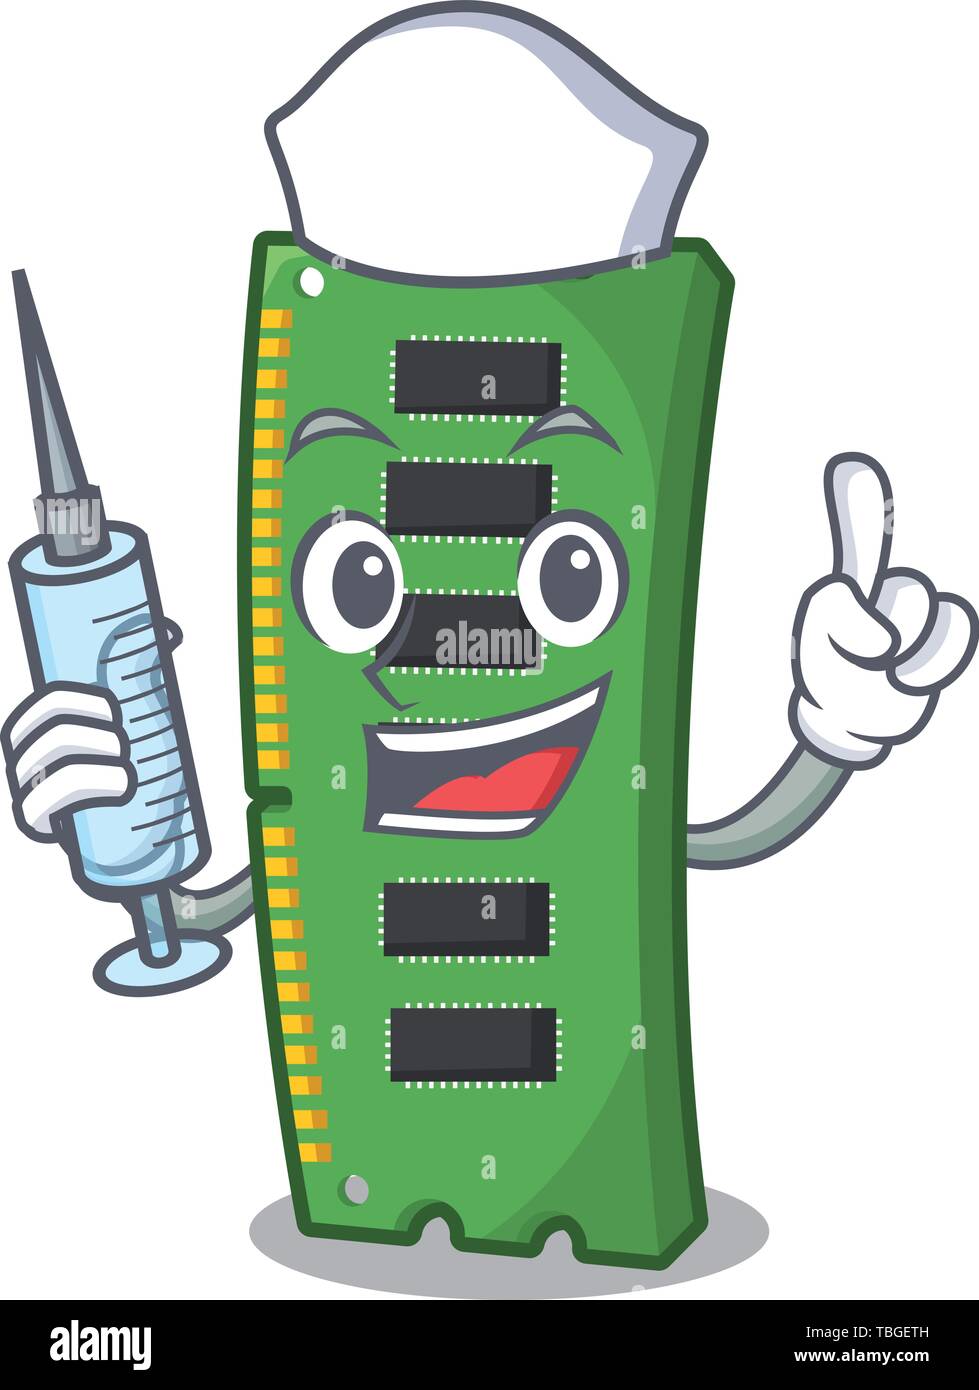 Nurse RAM memory card the mascot shape Stock Vector